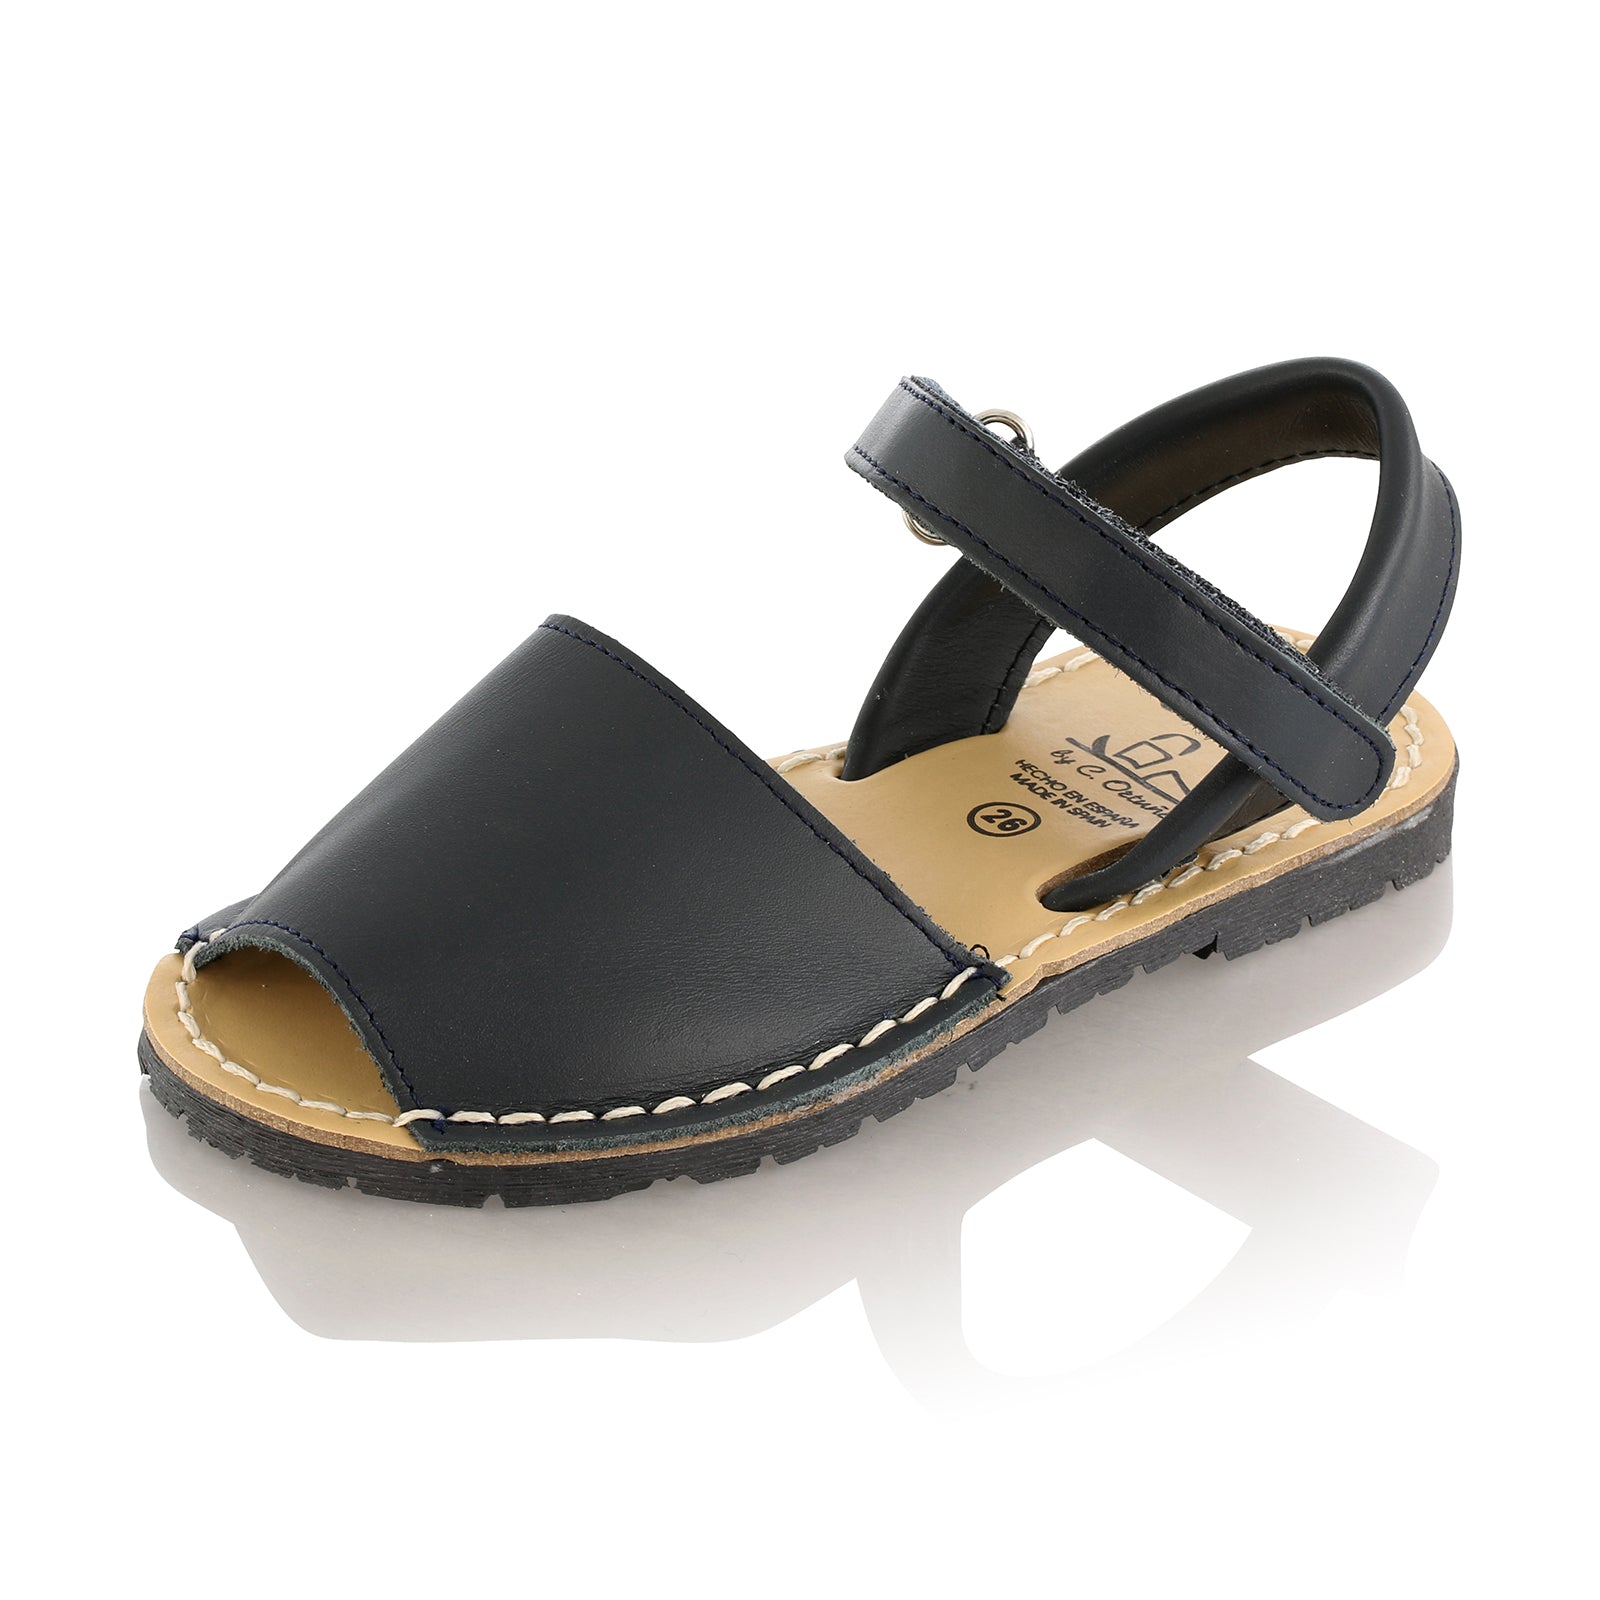 Sandale copii din piele naturala, model AVARCA CLASIC marino